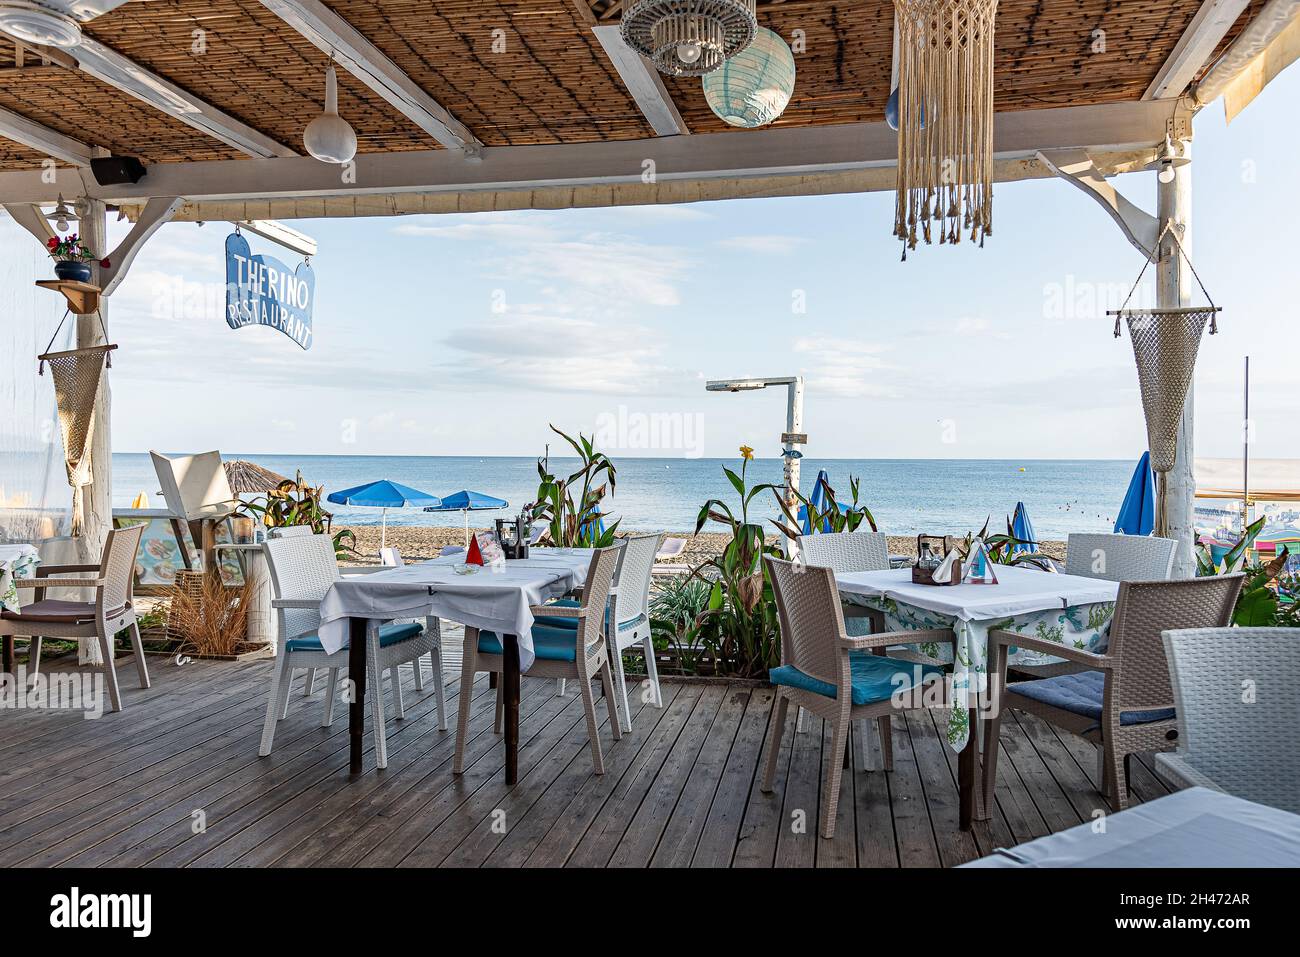 Therino greek blue and white restaurant on the beach at Platanias, Platanias, Crete, Greece, Oktober 7, 2021 Stock Photo